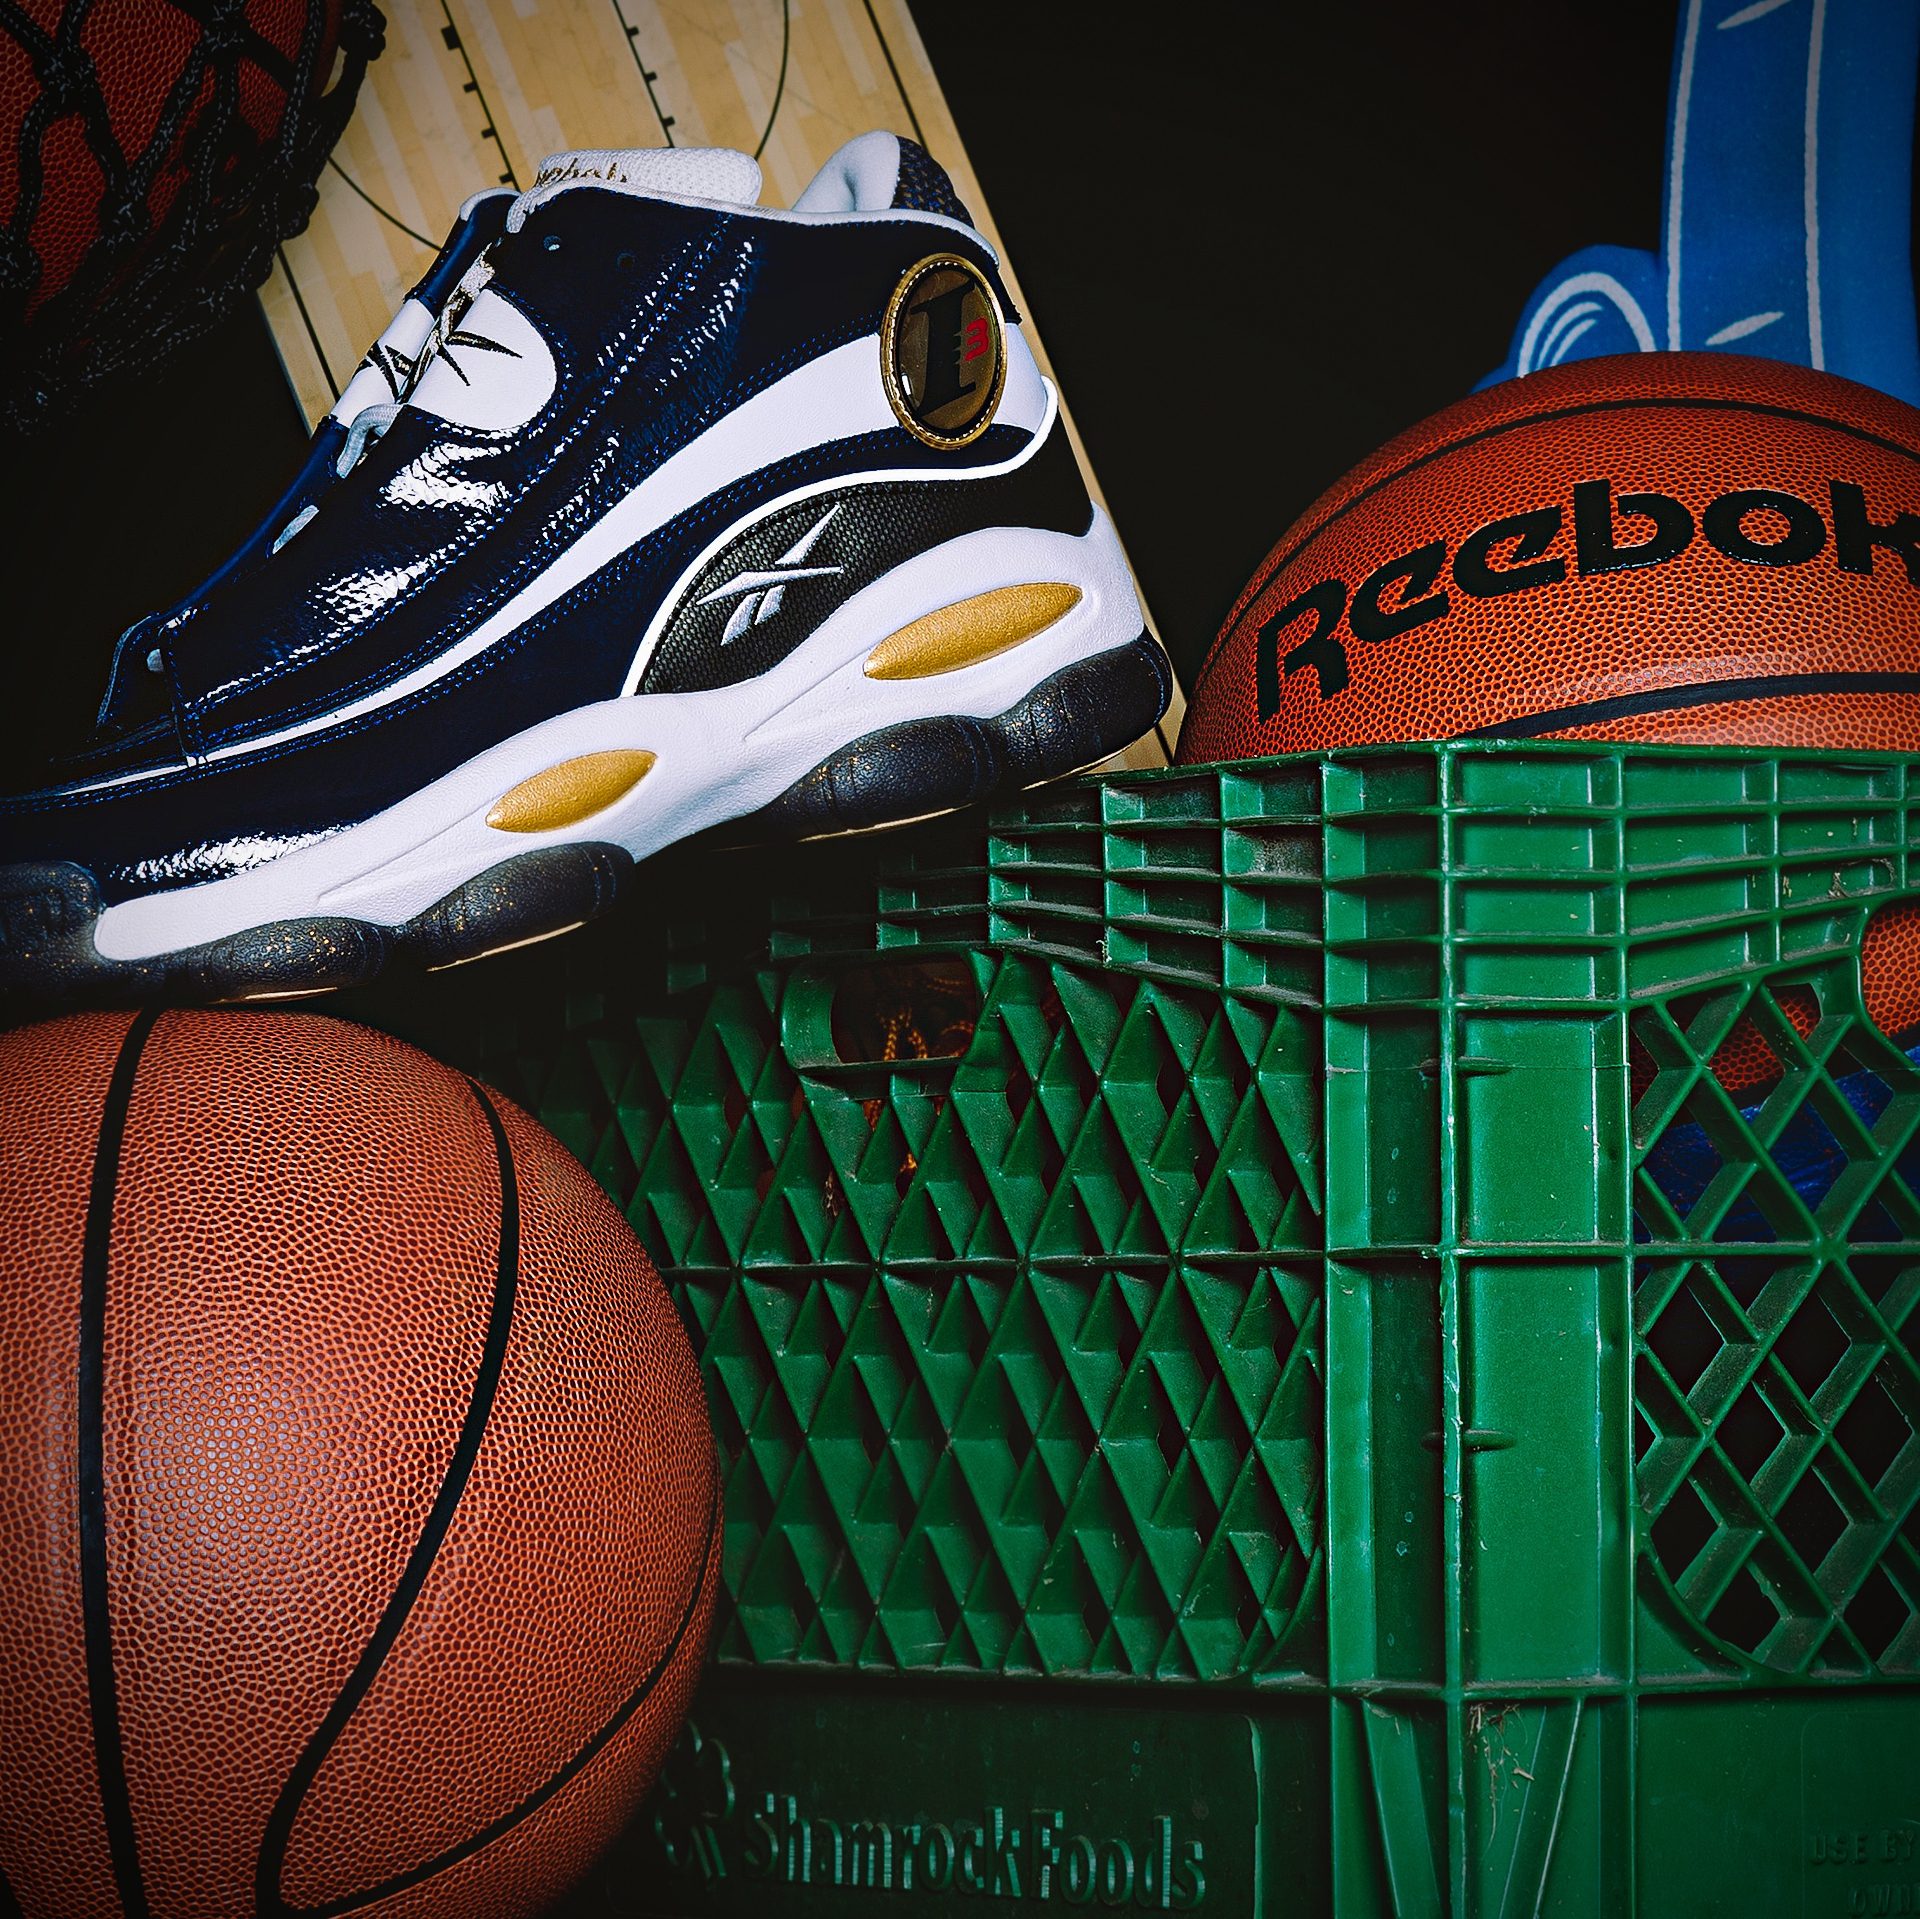 Reebok Basketball sneakers via 360 Magazine.